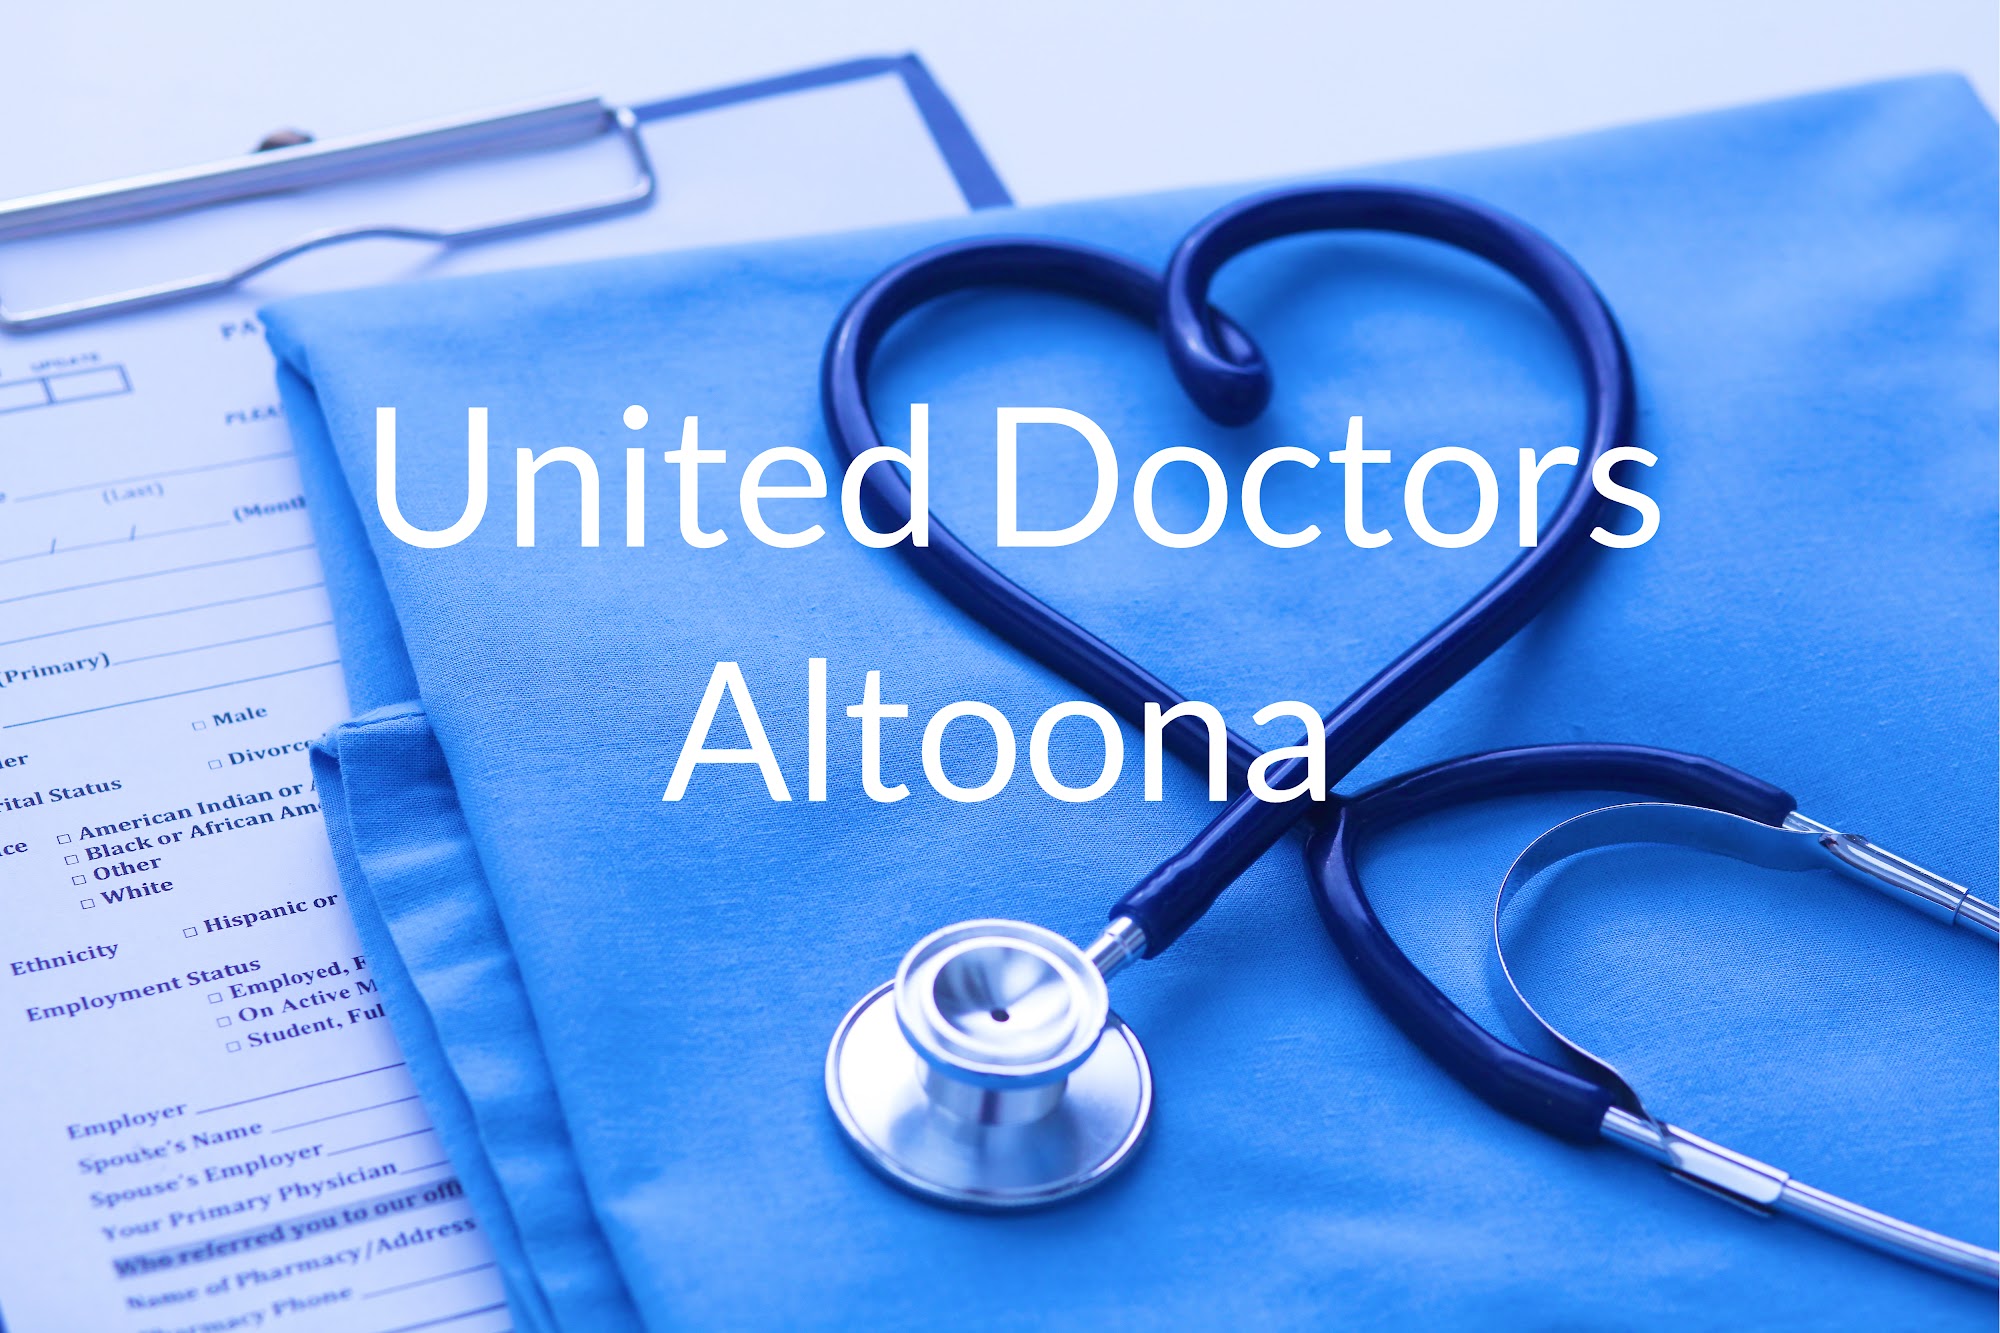 United Doctors Family Medical Center Altoona 7130 6th Ave, Altoona Alabama 35952